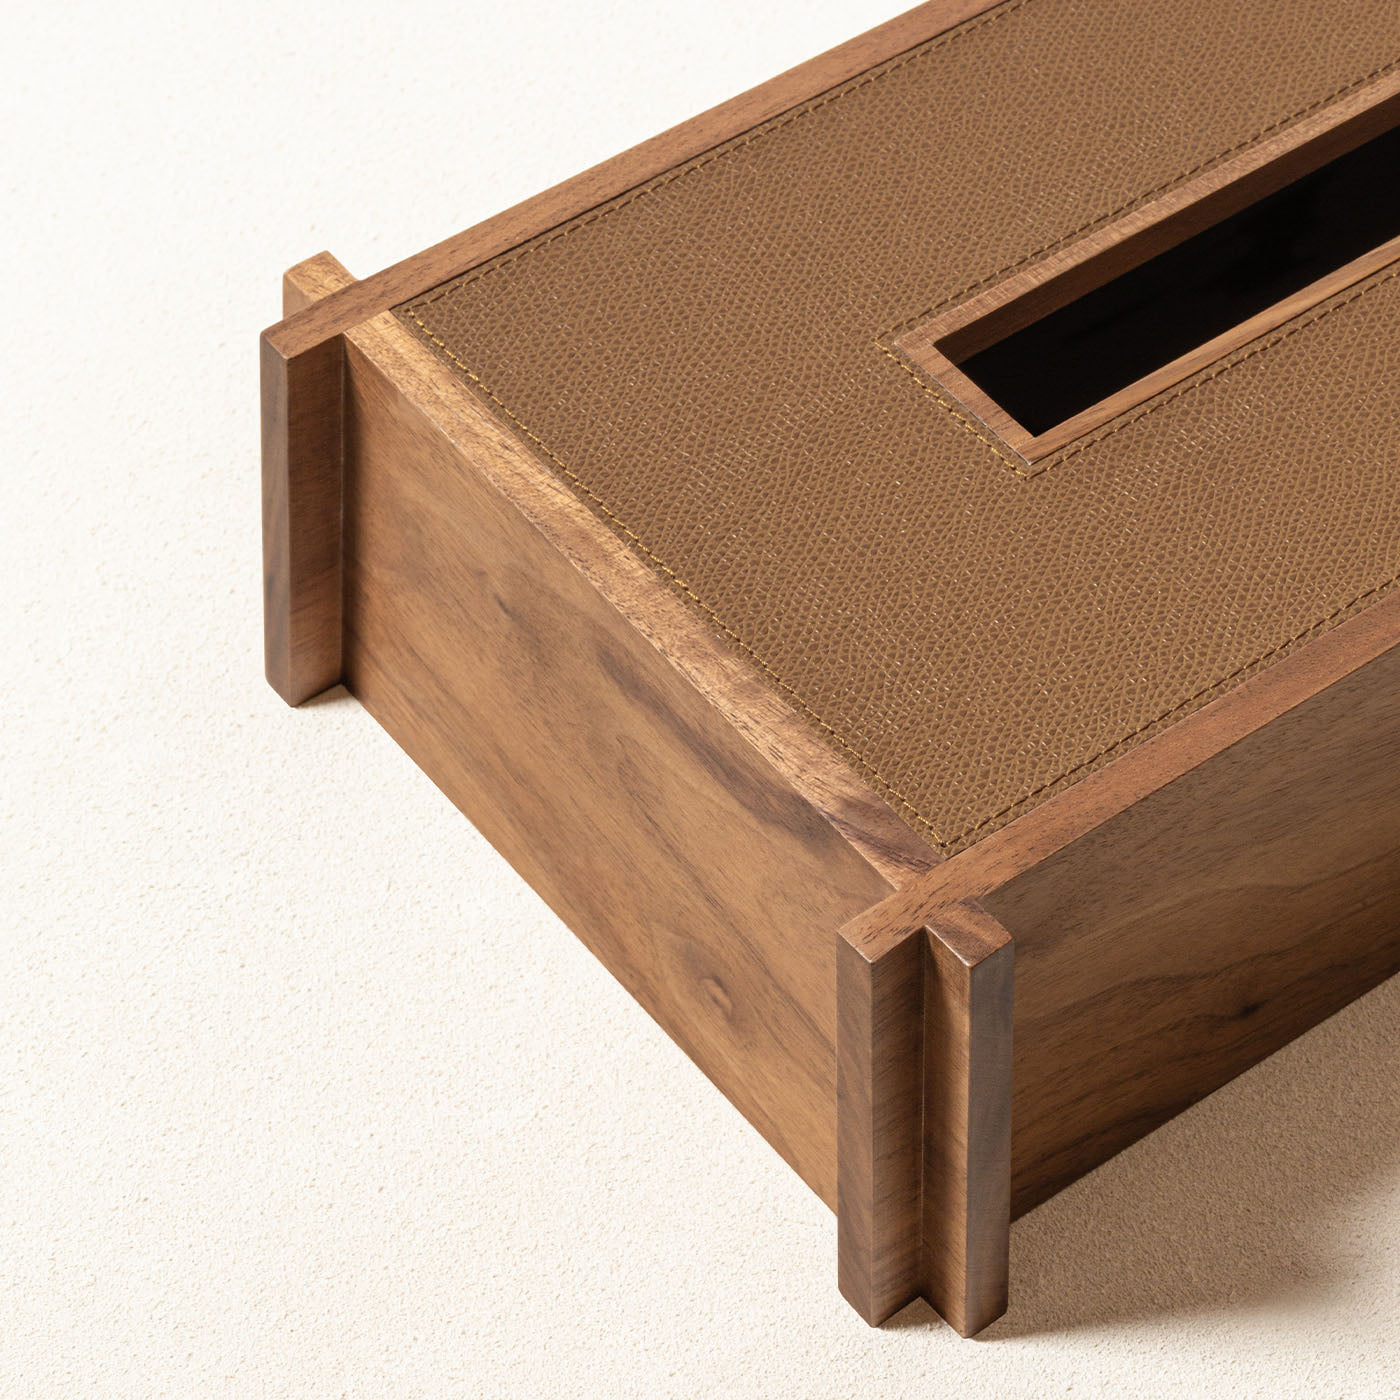 Structura Leather & Wood Rectangular Tissue Holder #1 - Alternative view 1